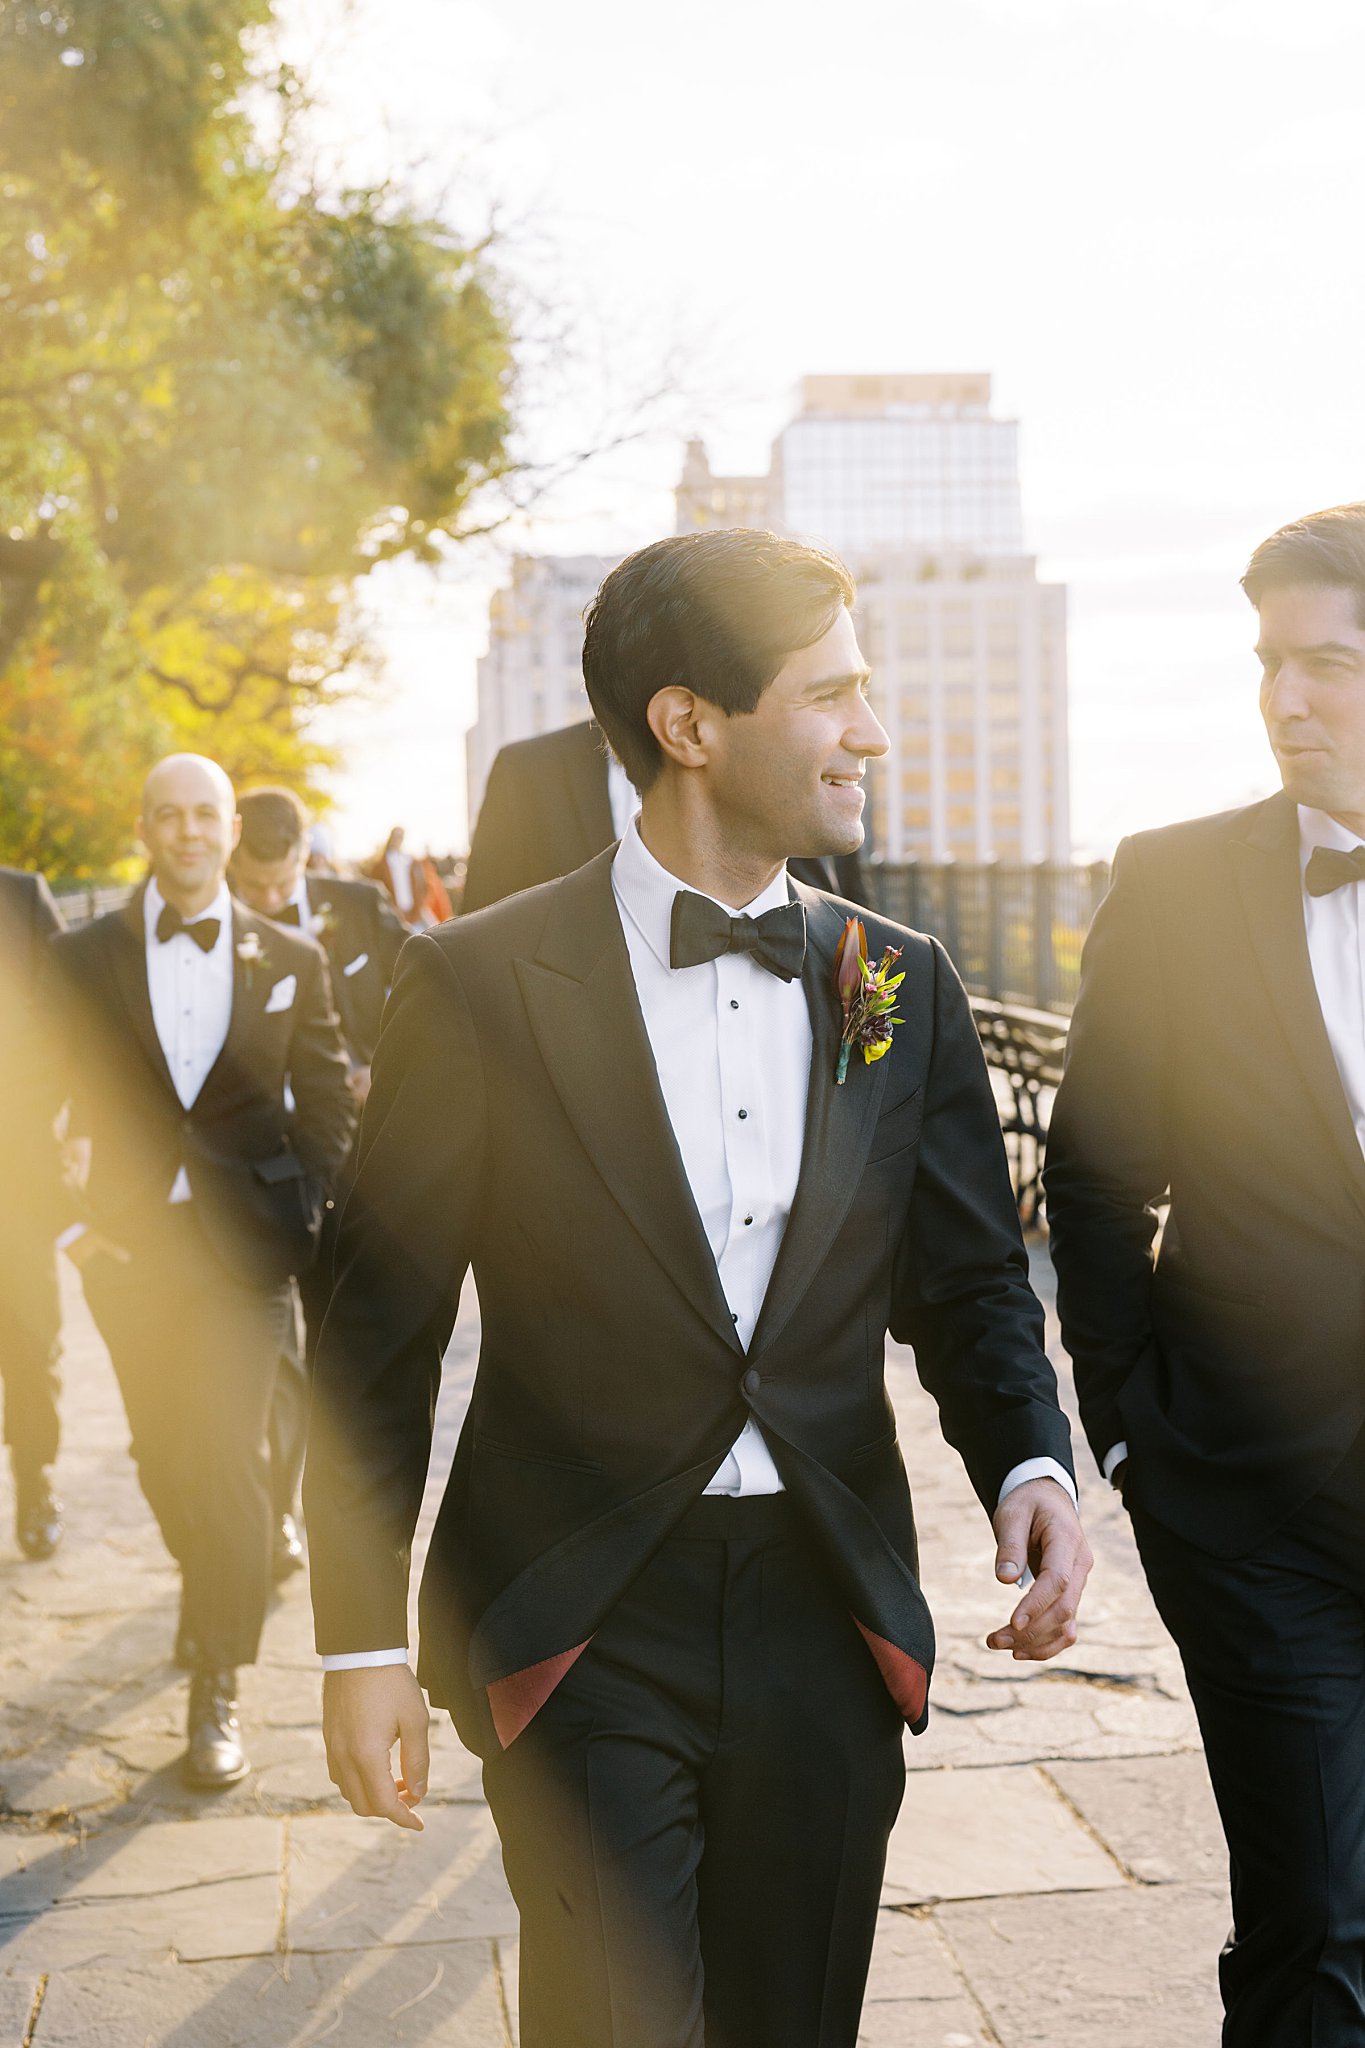 sun shines through on groom walking by NYC wedding photographer 